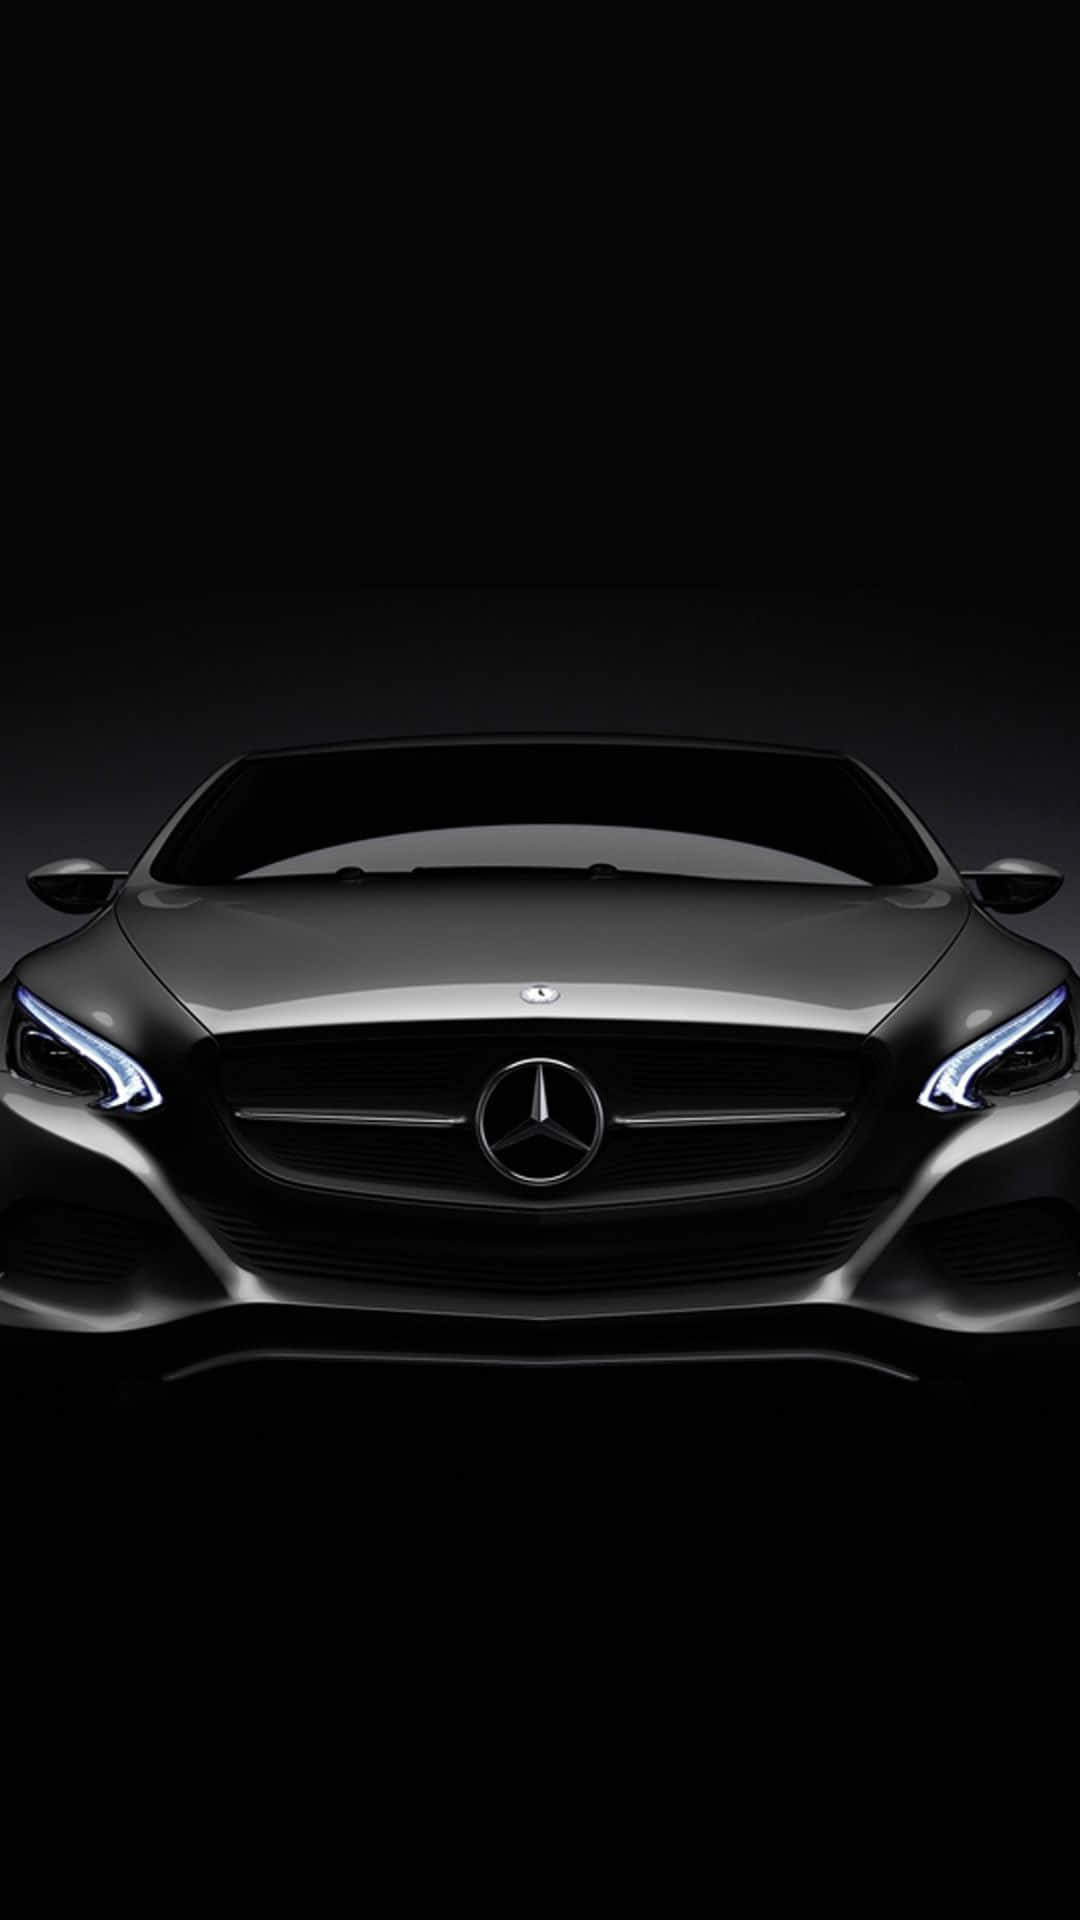 Mercedes Hintergrundbild 1080x1920. Download Aesthetic Black Mercedes Benz iPhone Wallpaper